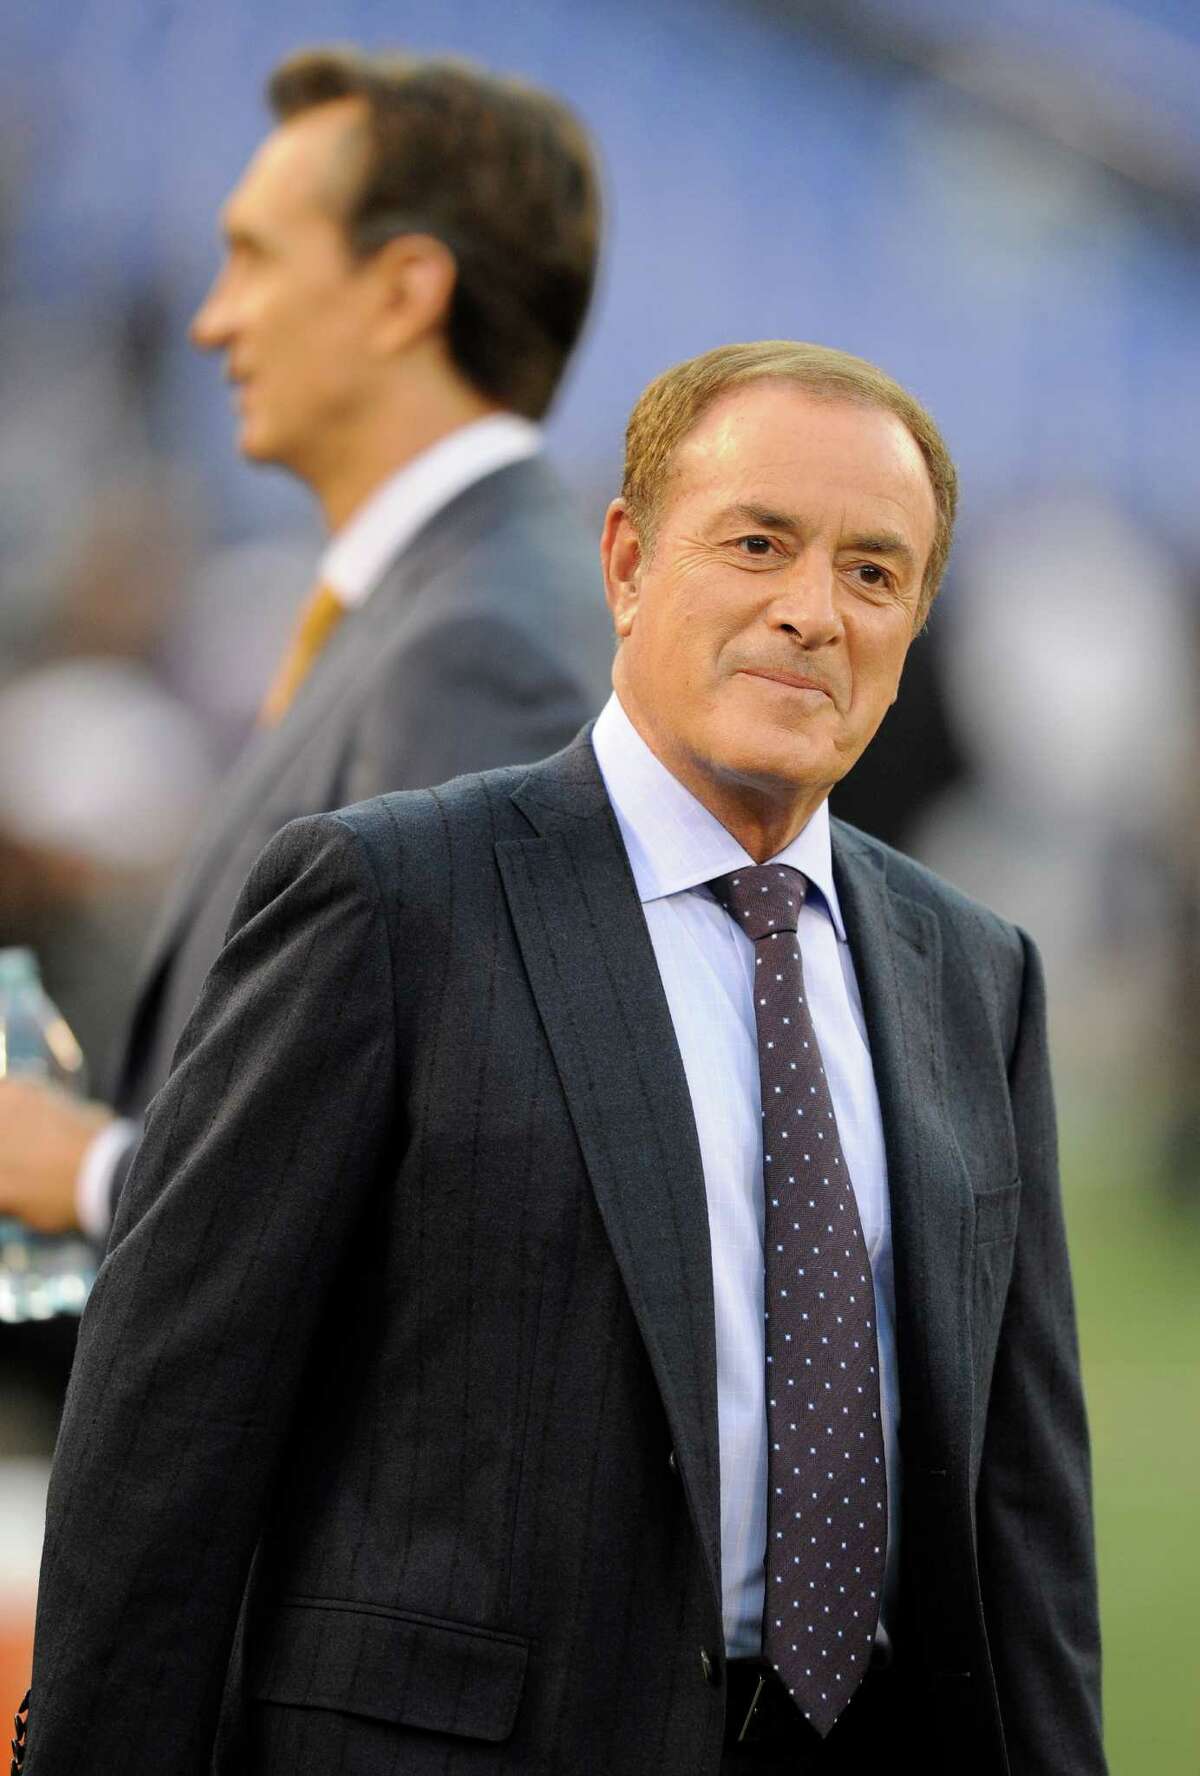 NBC looks to keep 'Sunday Night Football' analyst Cris